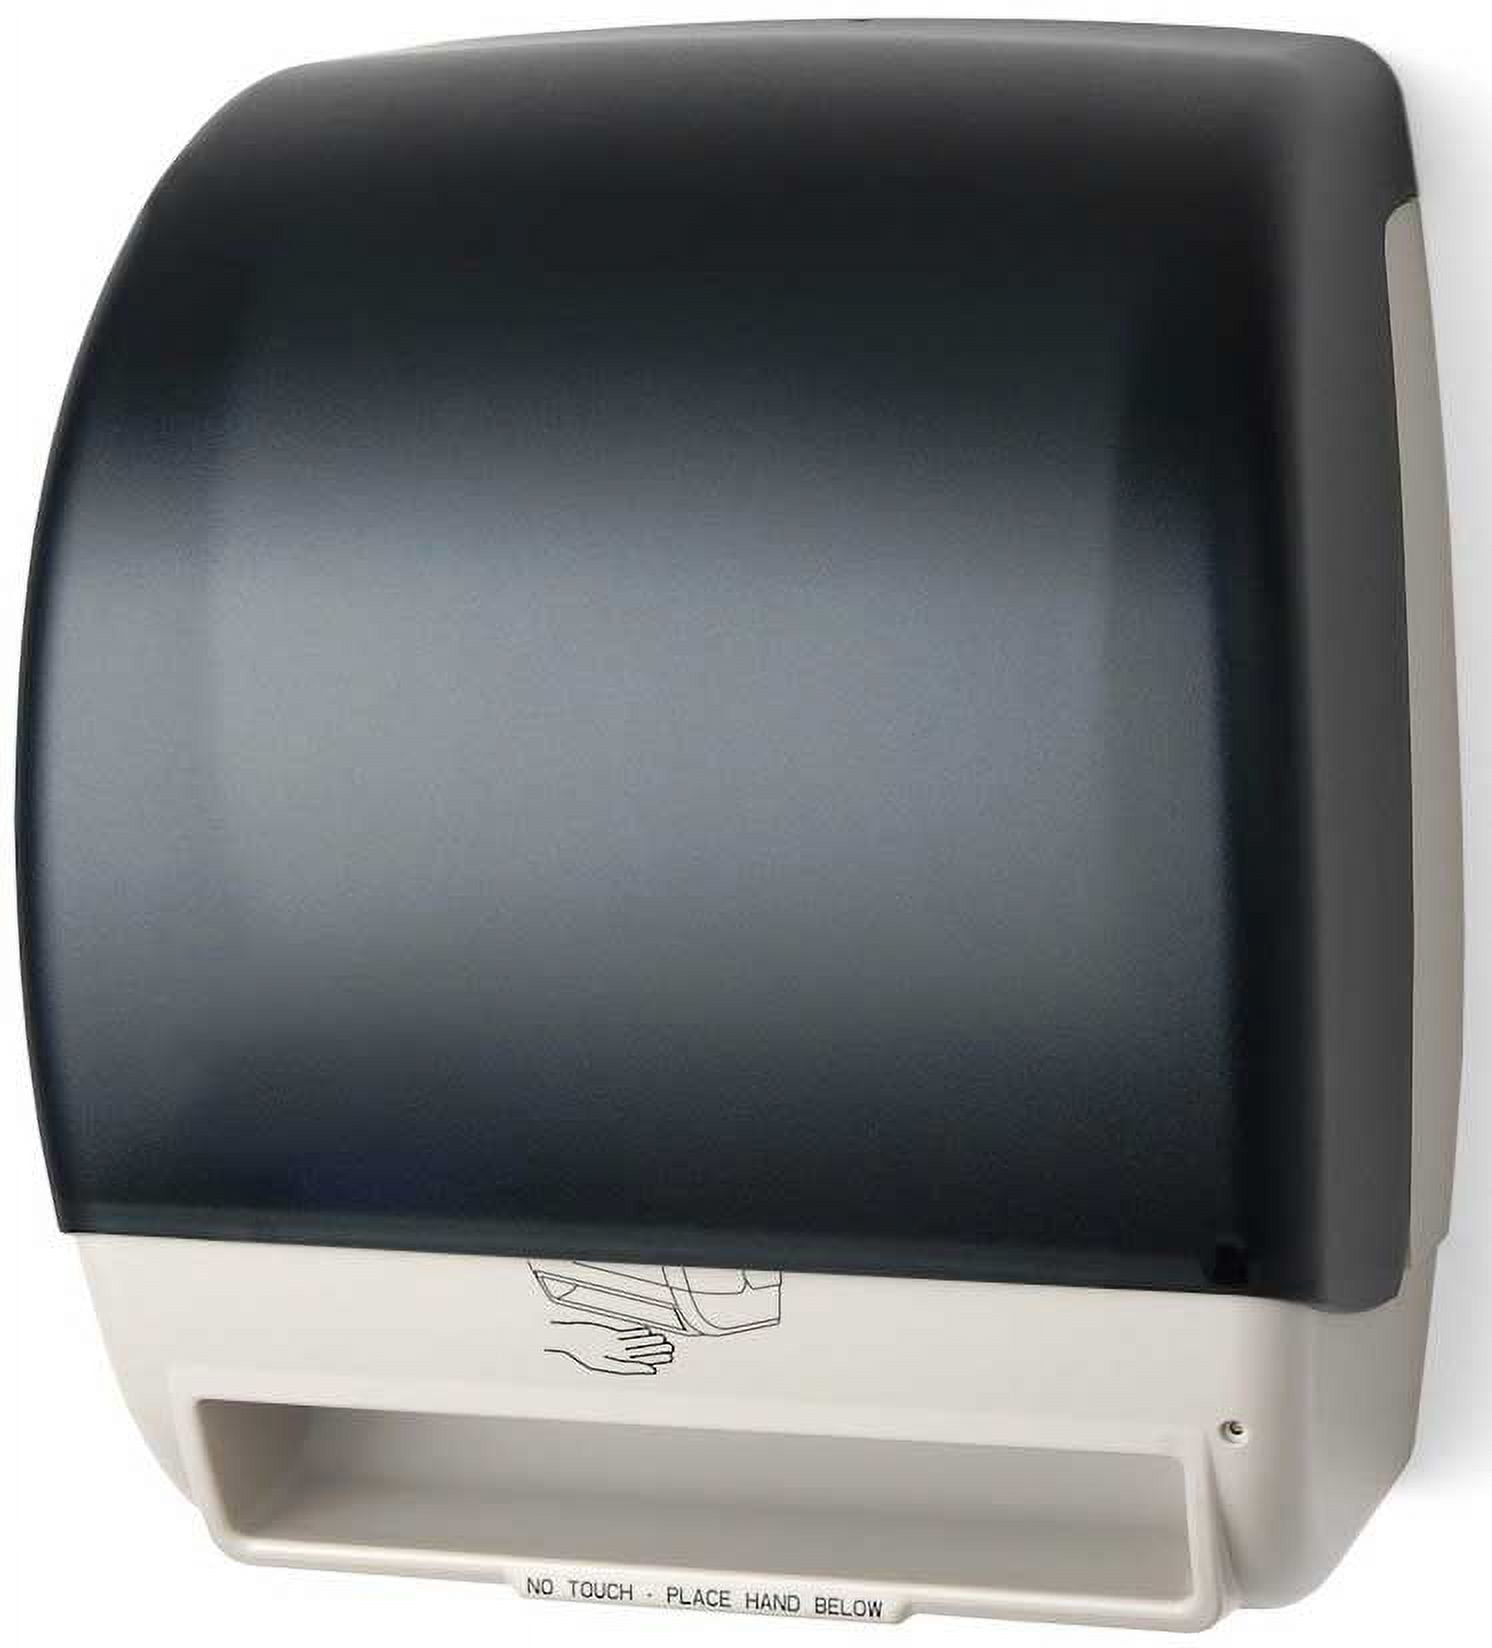 San Jamar Tear-N-Dry Essence Plastic Paper Towel Dispenser, Towel Dispenser  for Bathroom, 1Ounces14.75 X 12.25 Inches, Black